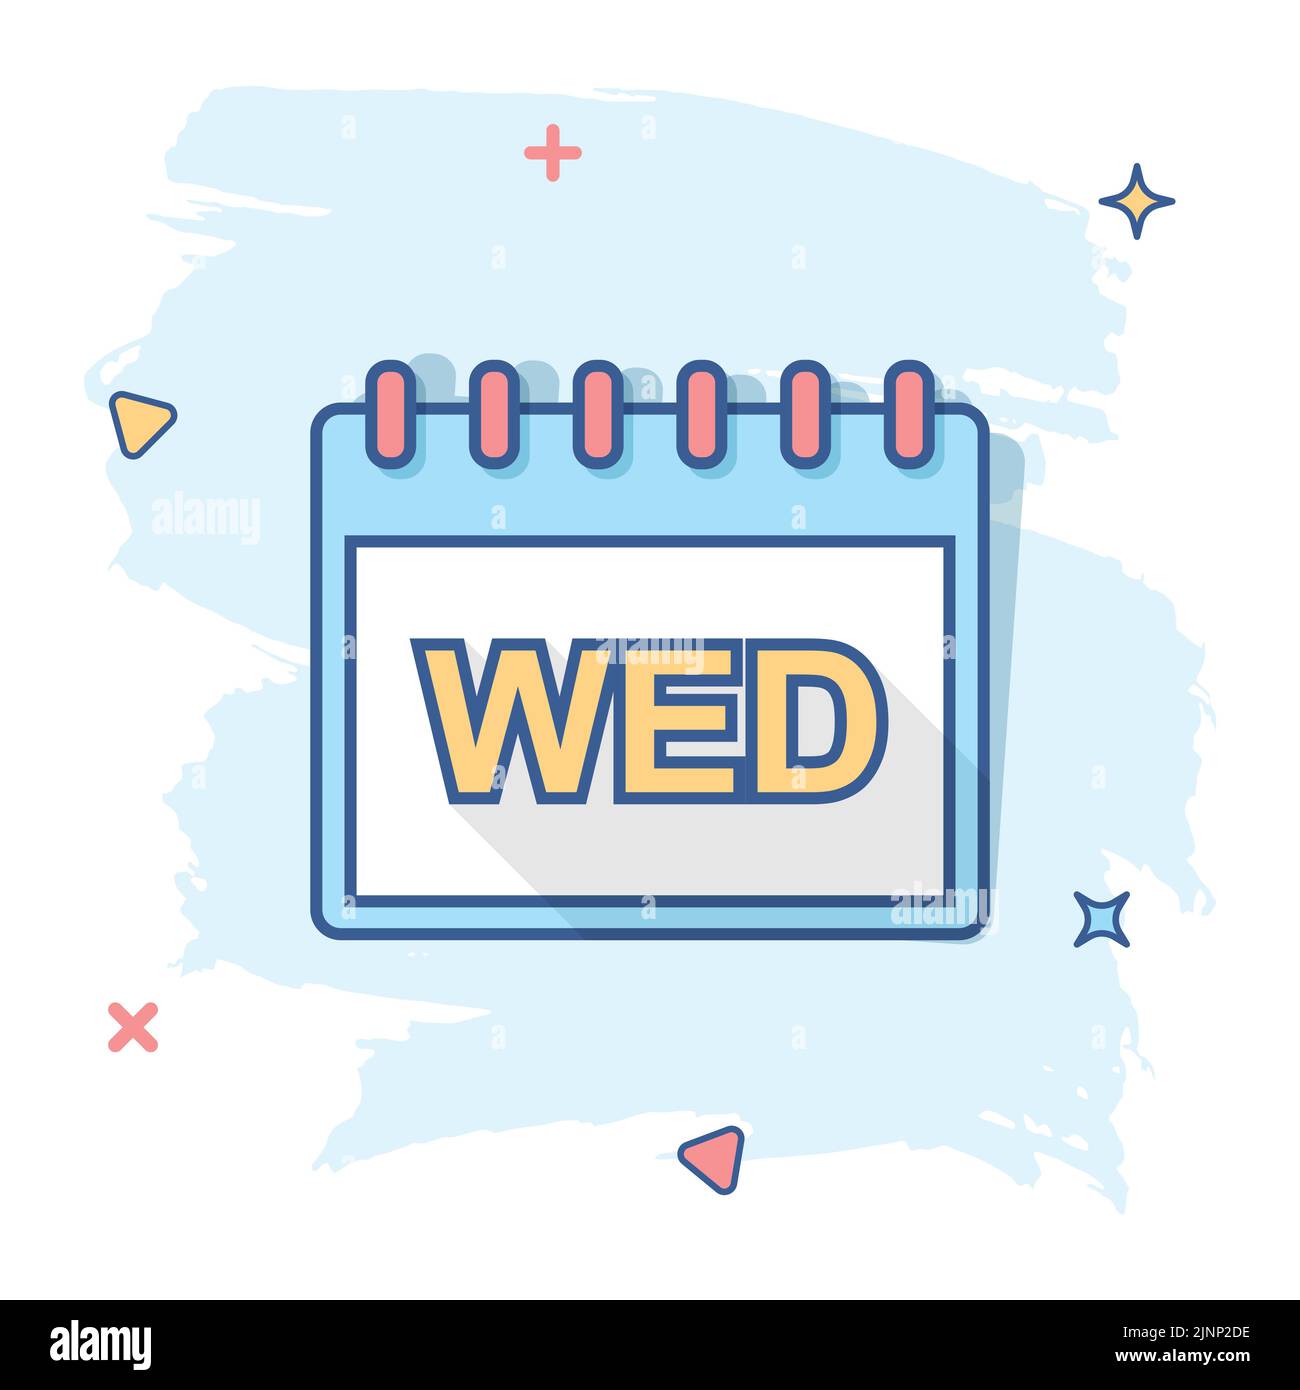 Vector cartoon wednesday calendar page icon in comic style. Calendar sign illustration pictogram. Wednesday agenda business splash effect concept. Stock Vector